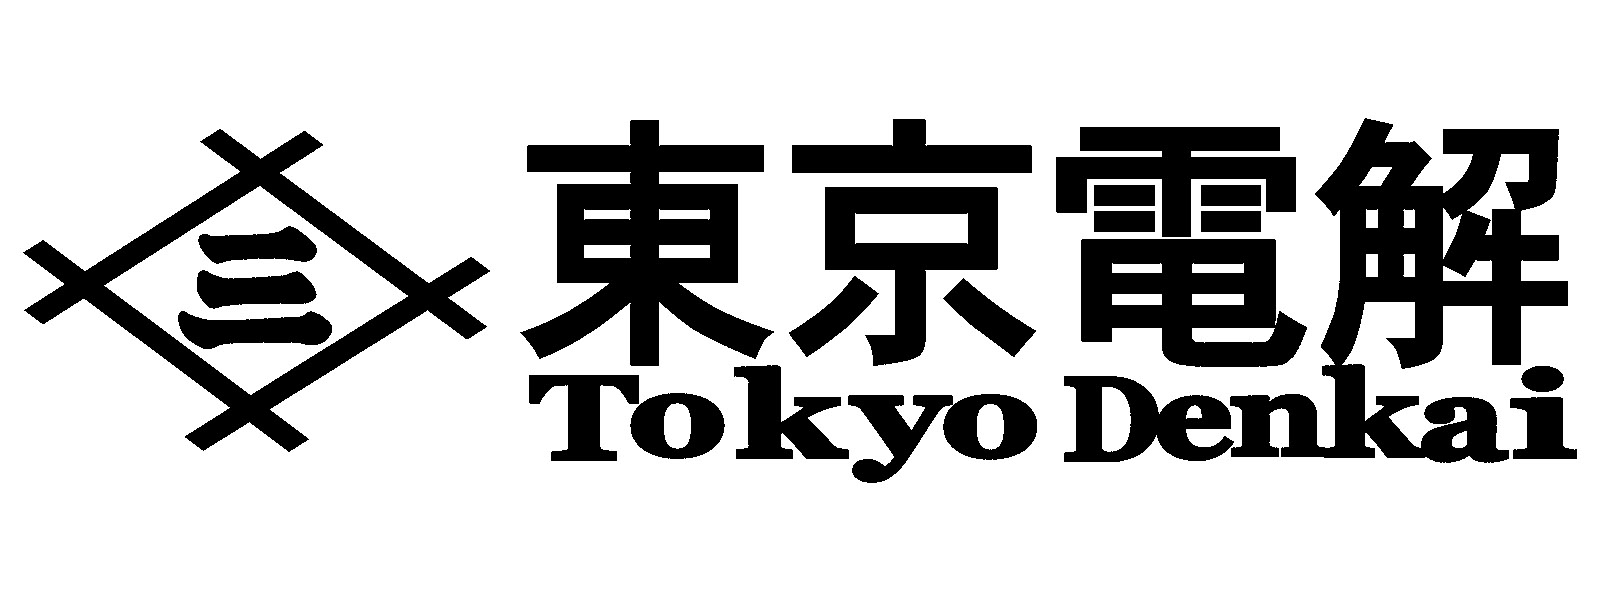 Tokyo Denkai Logo